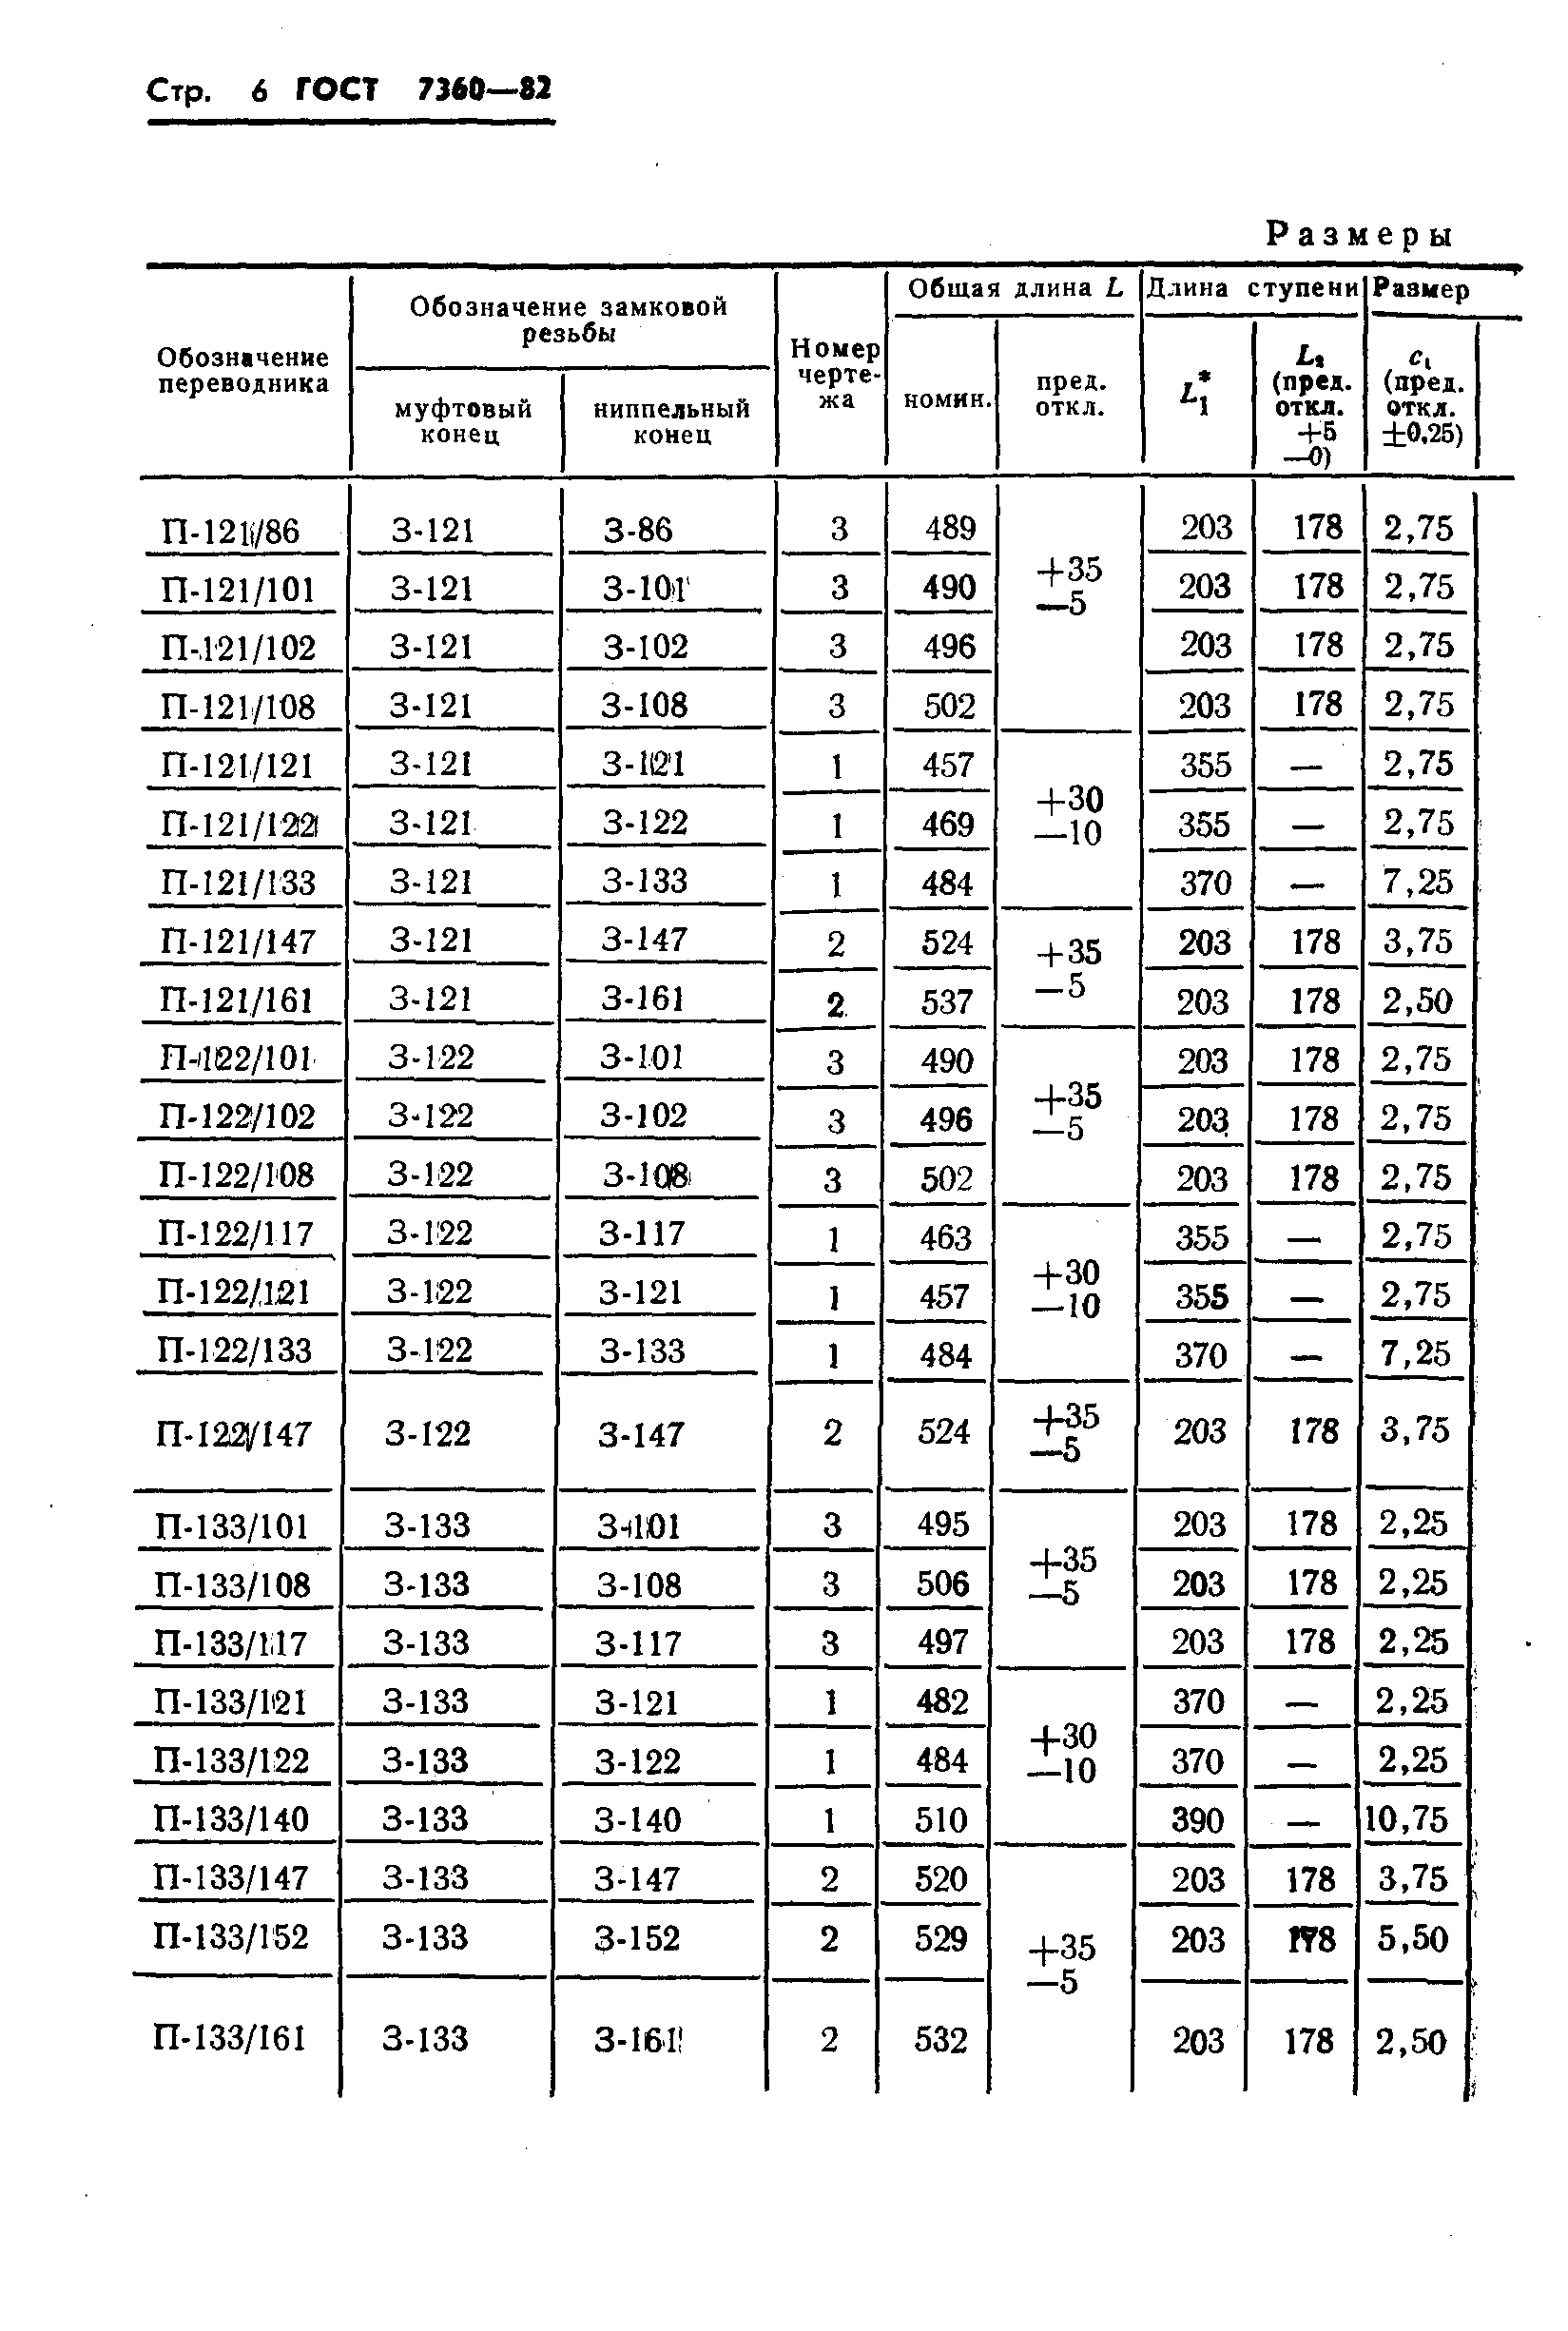 ГОСТ 7360-82